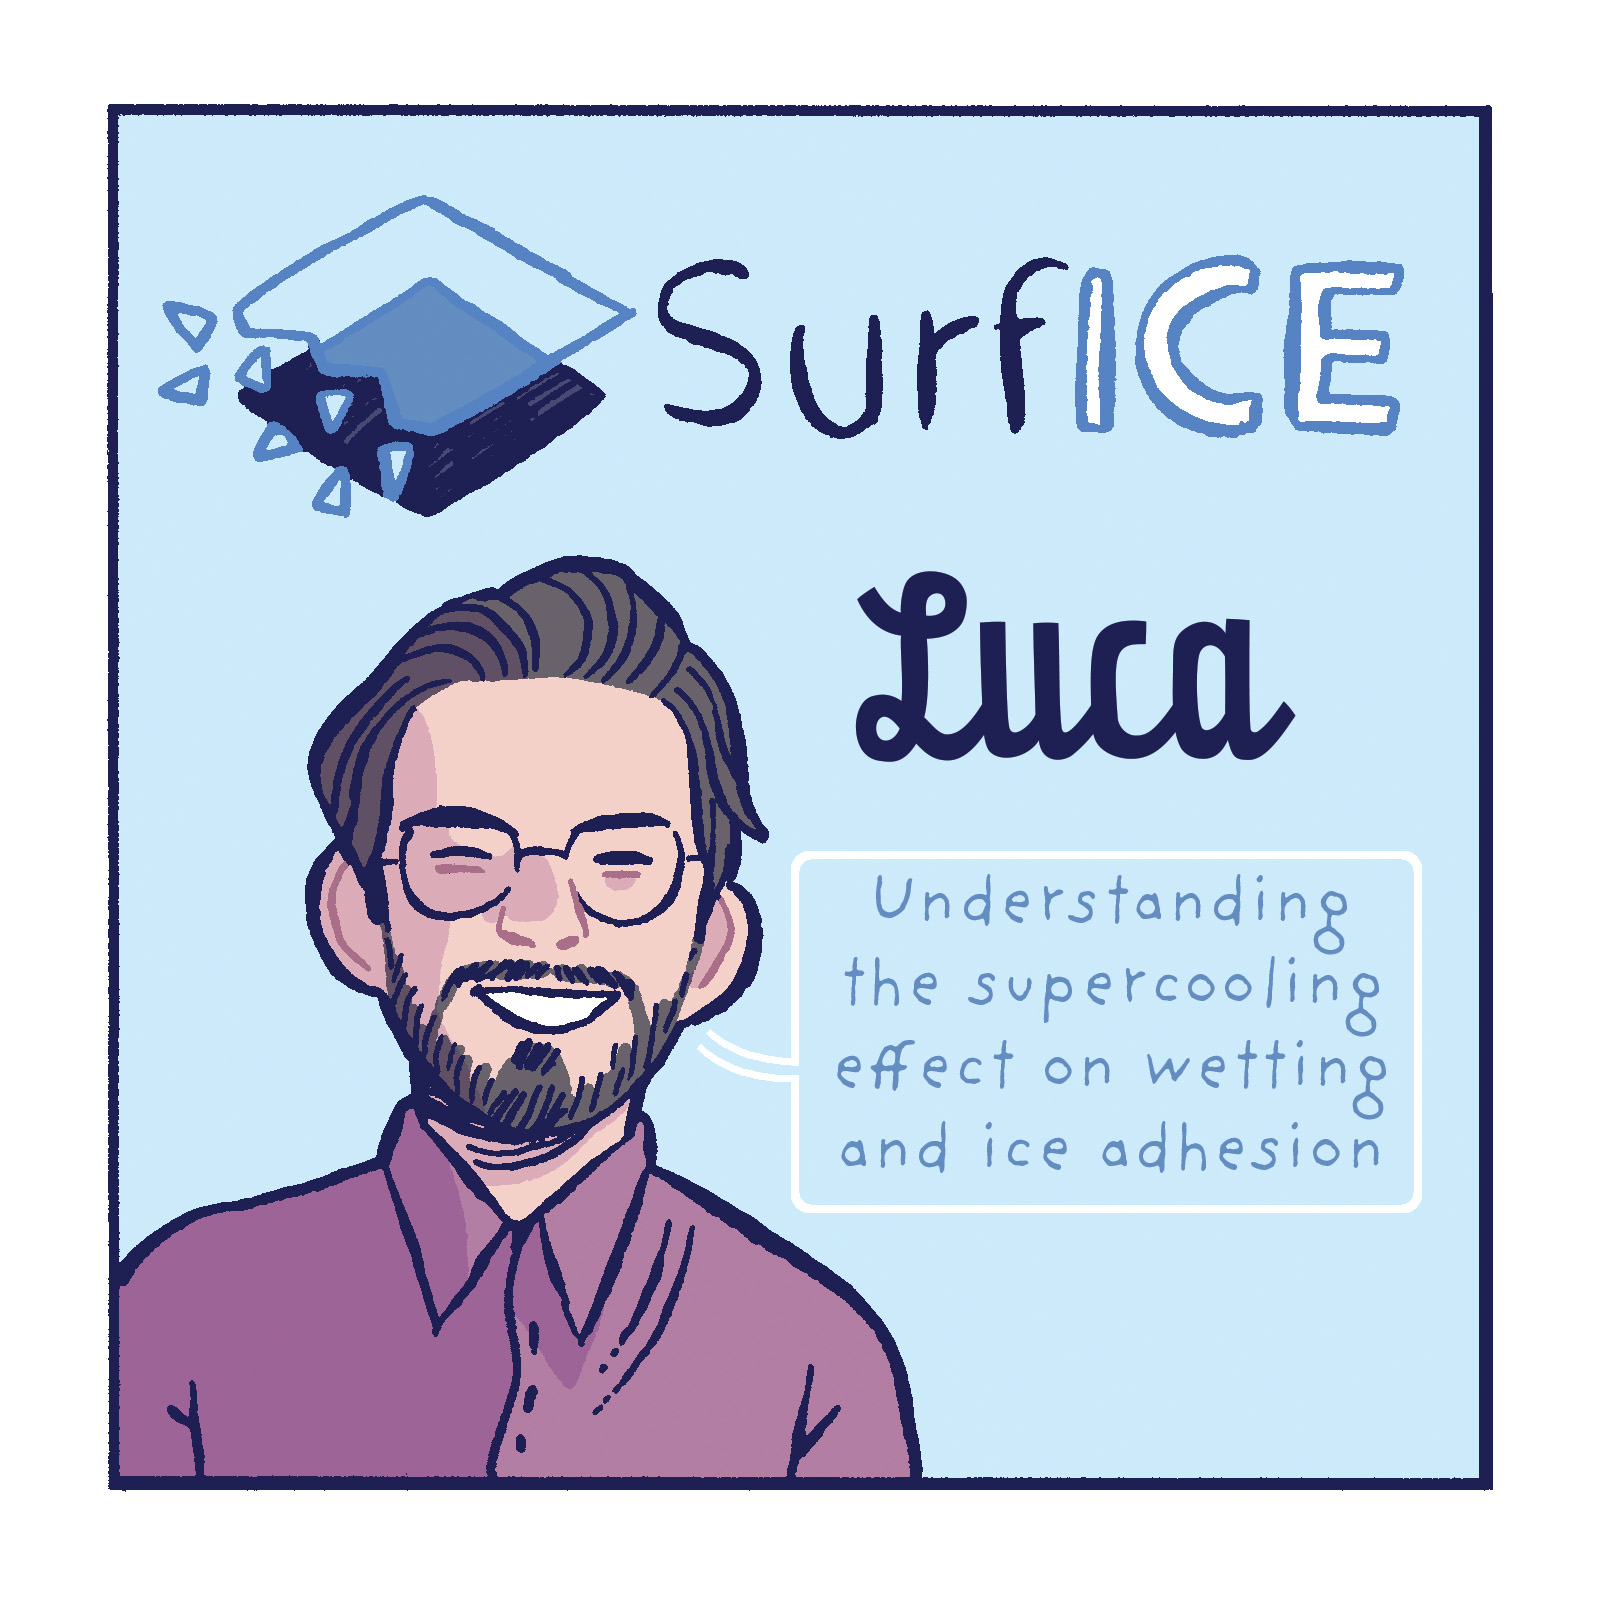 Luca’s comic